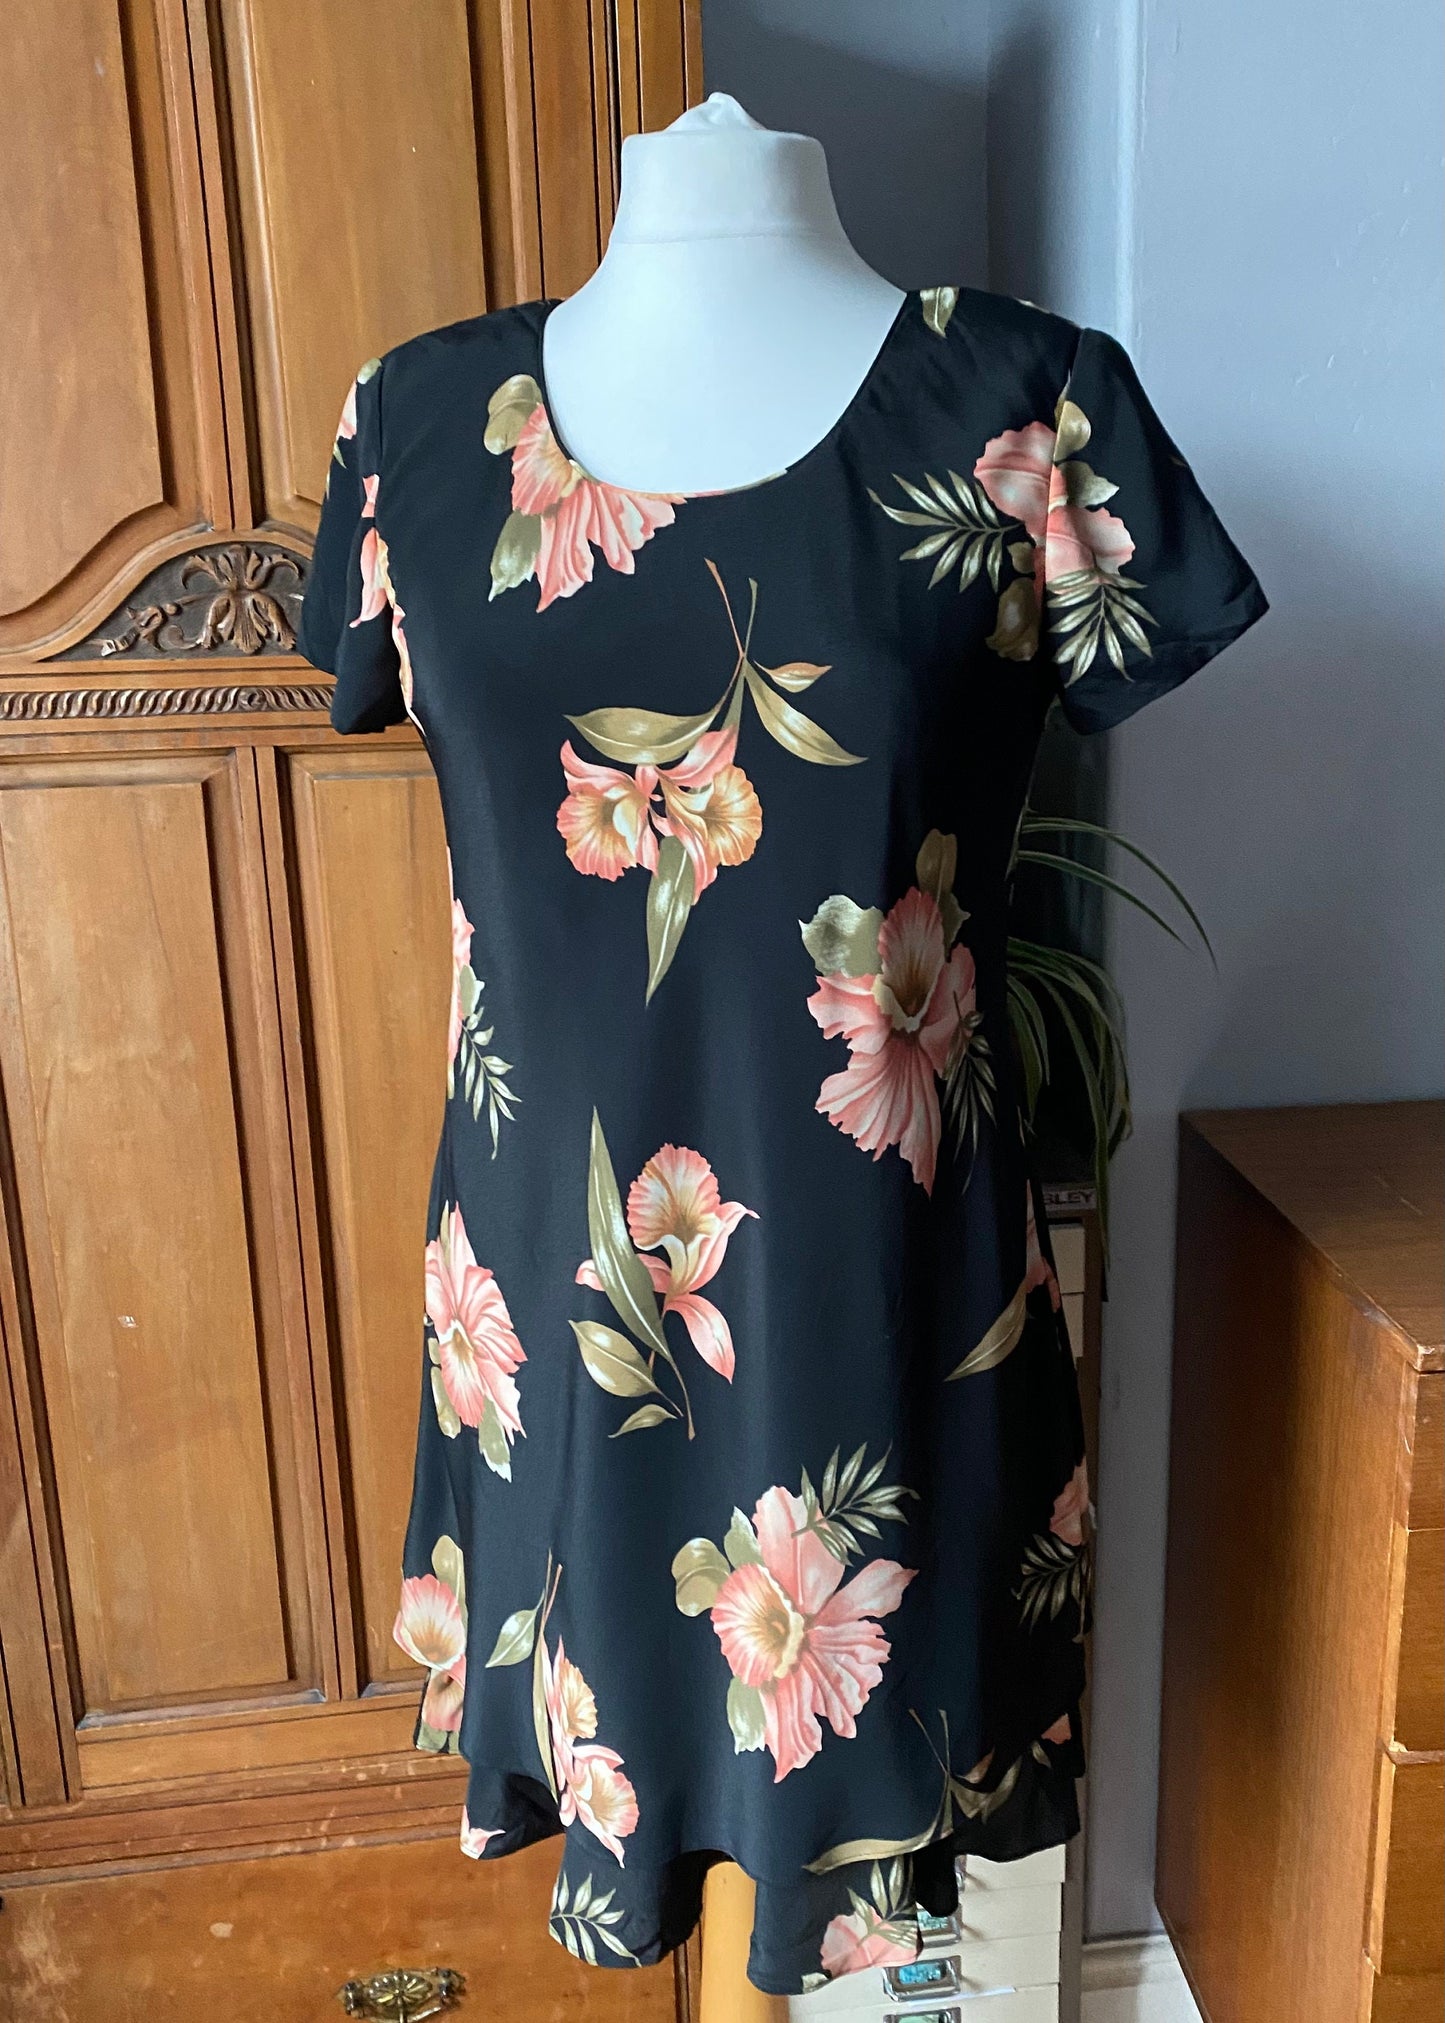 90s black and peach floral mini dress with a ruffle hem. Approx  U.K size 14 -16